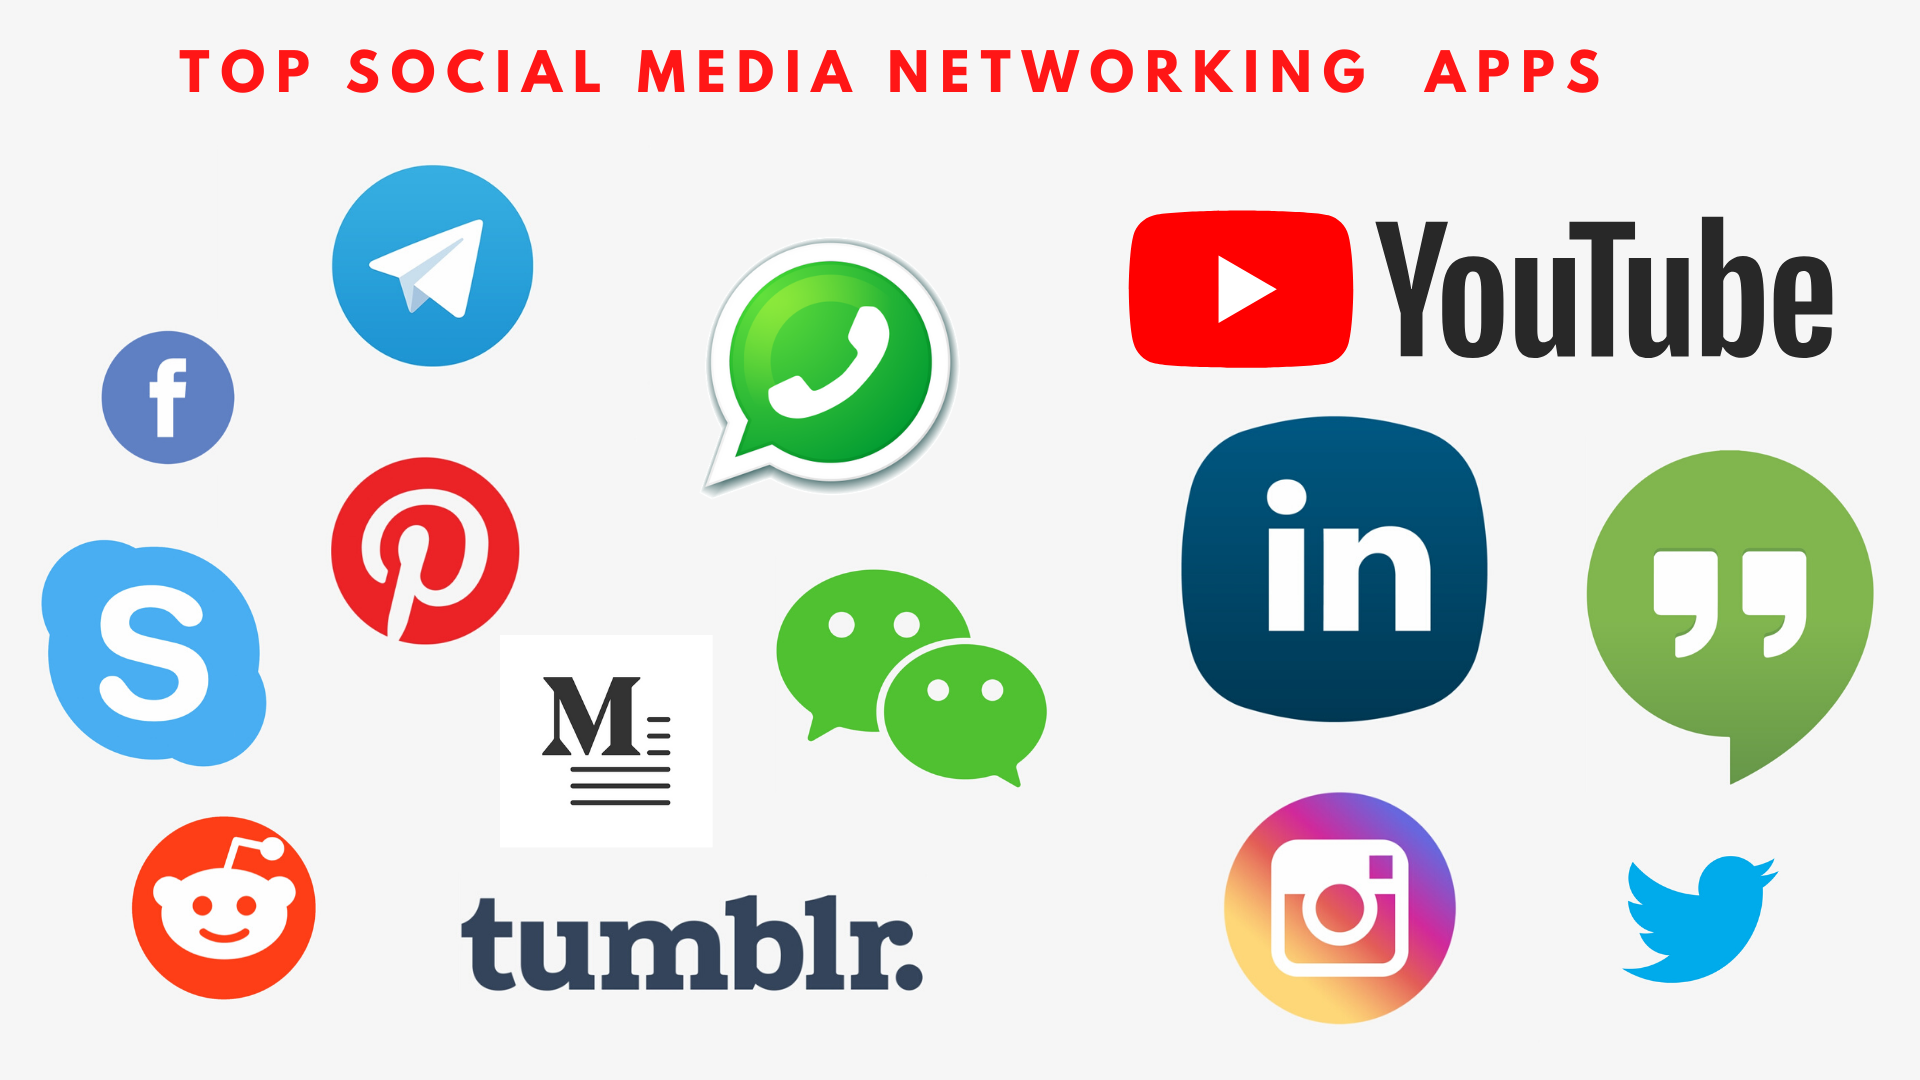 TOP SOCIAL MEDIA NETWORKING APPS